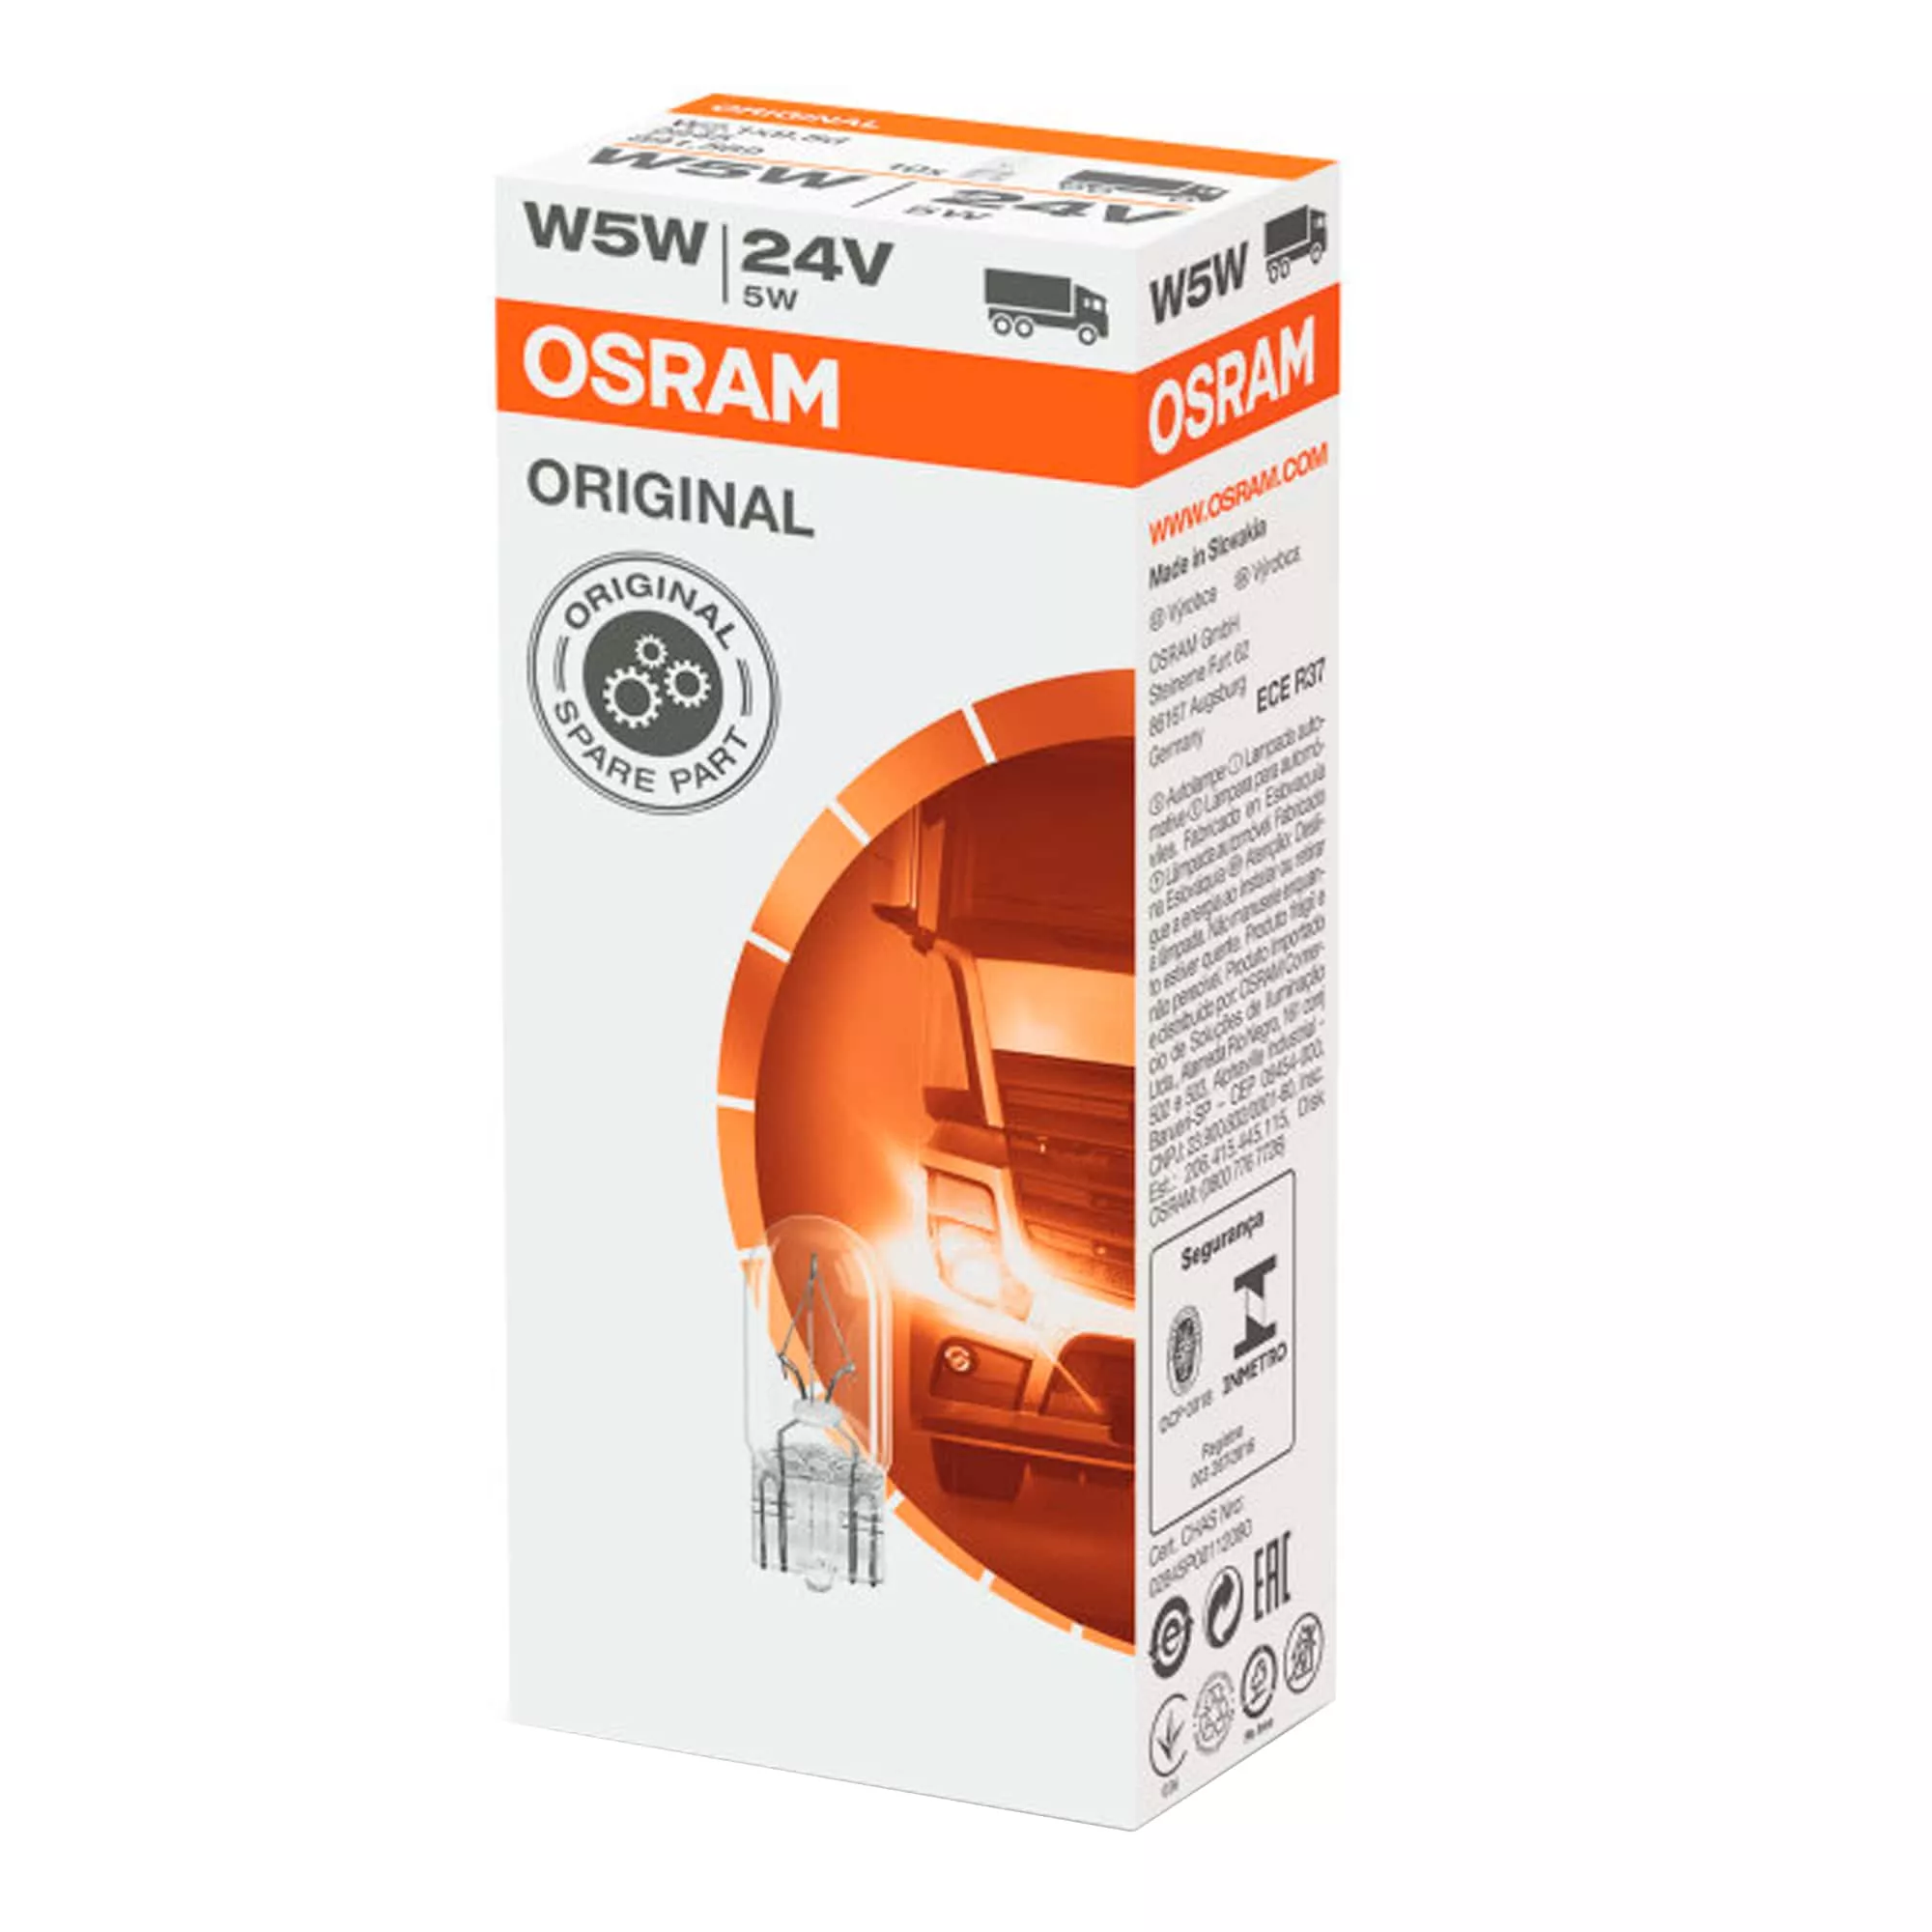 Лампа Osram Original W5W 24V 5W 2845